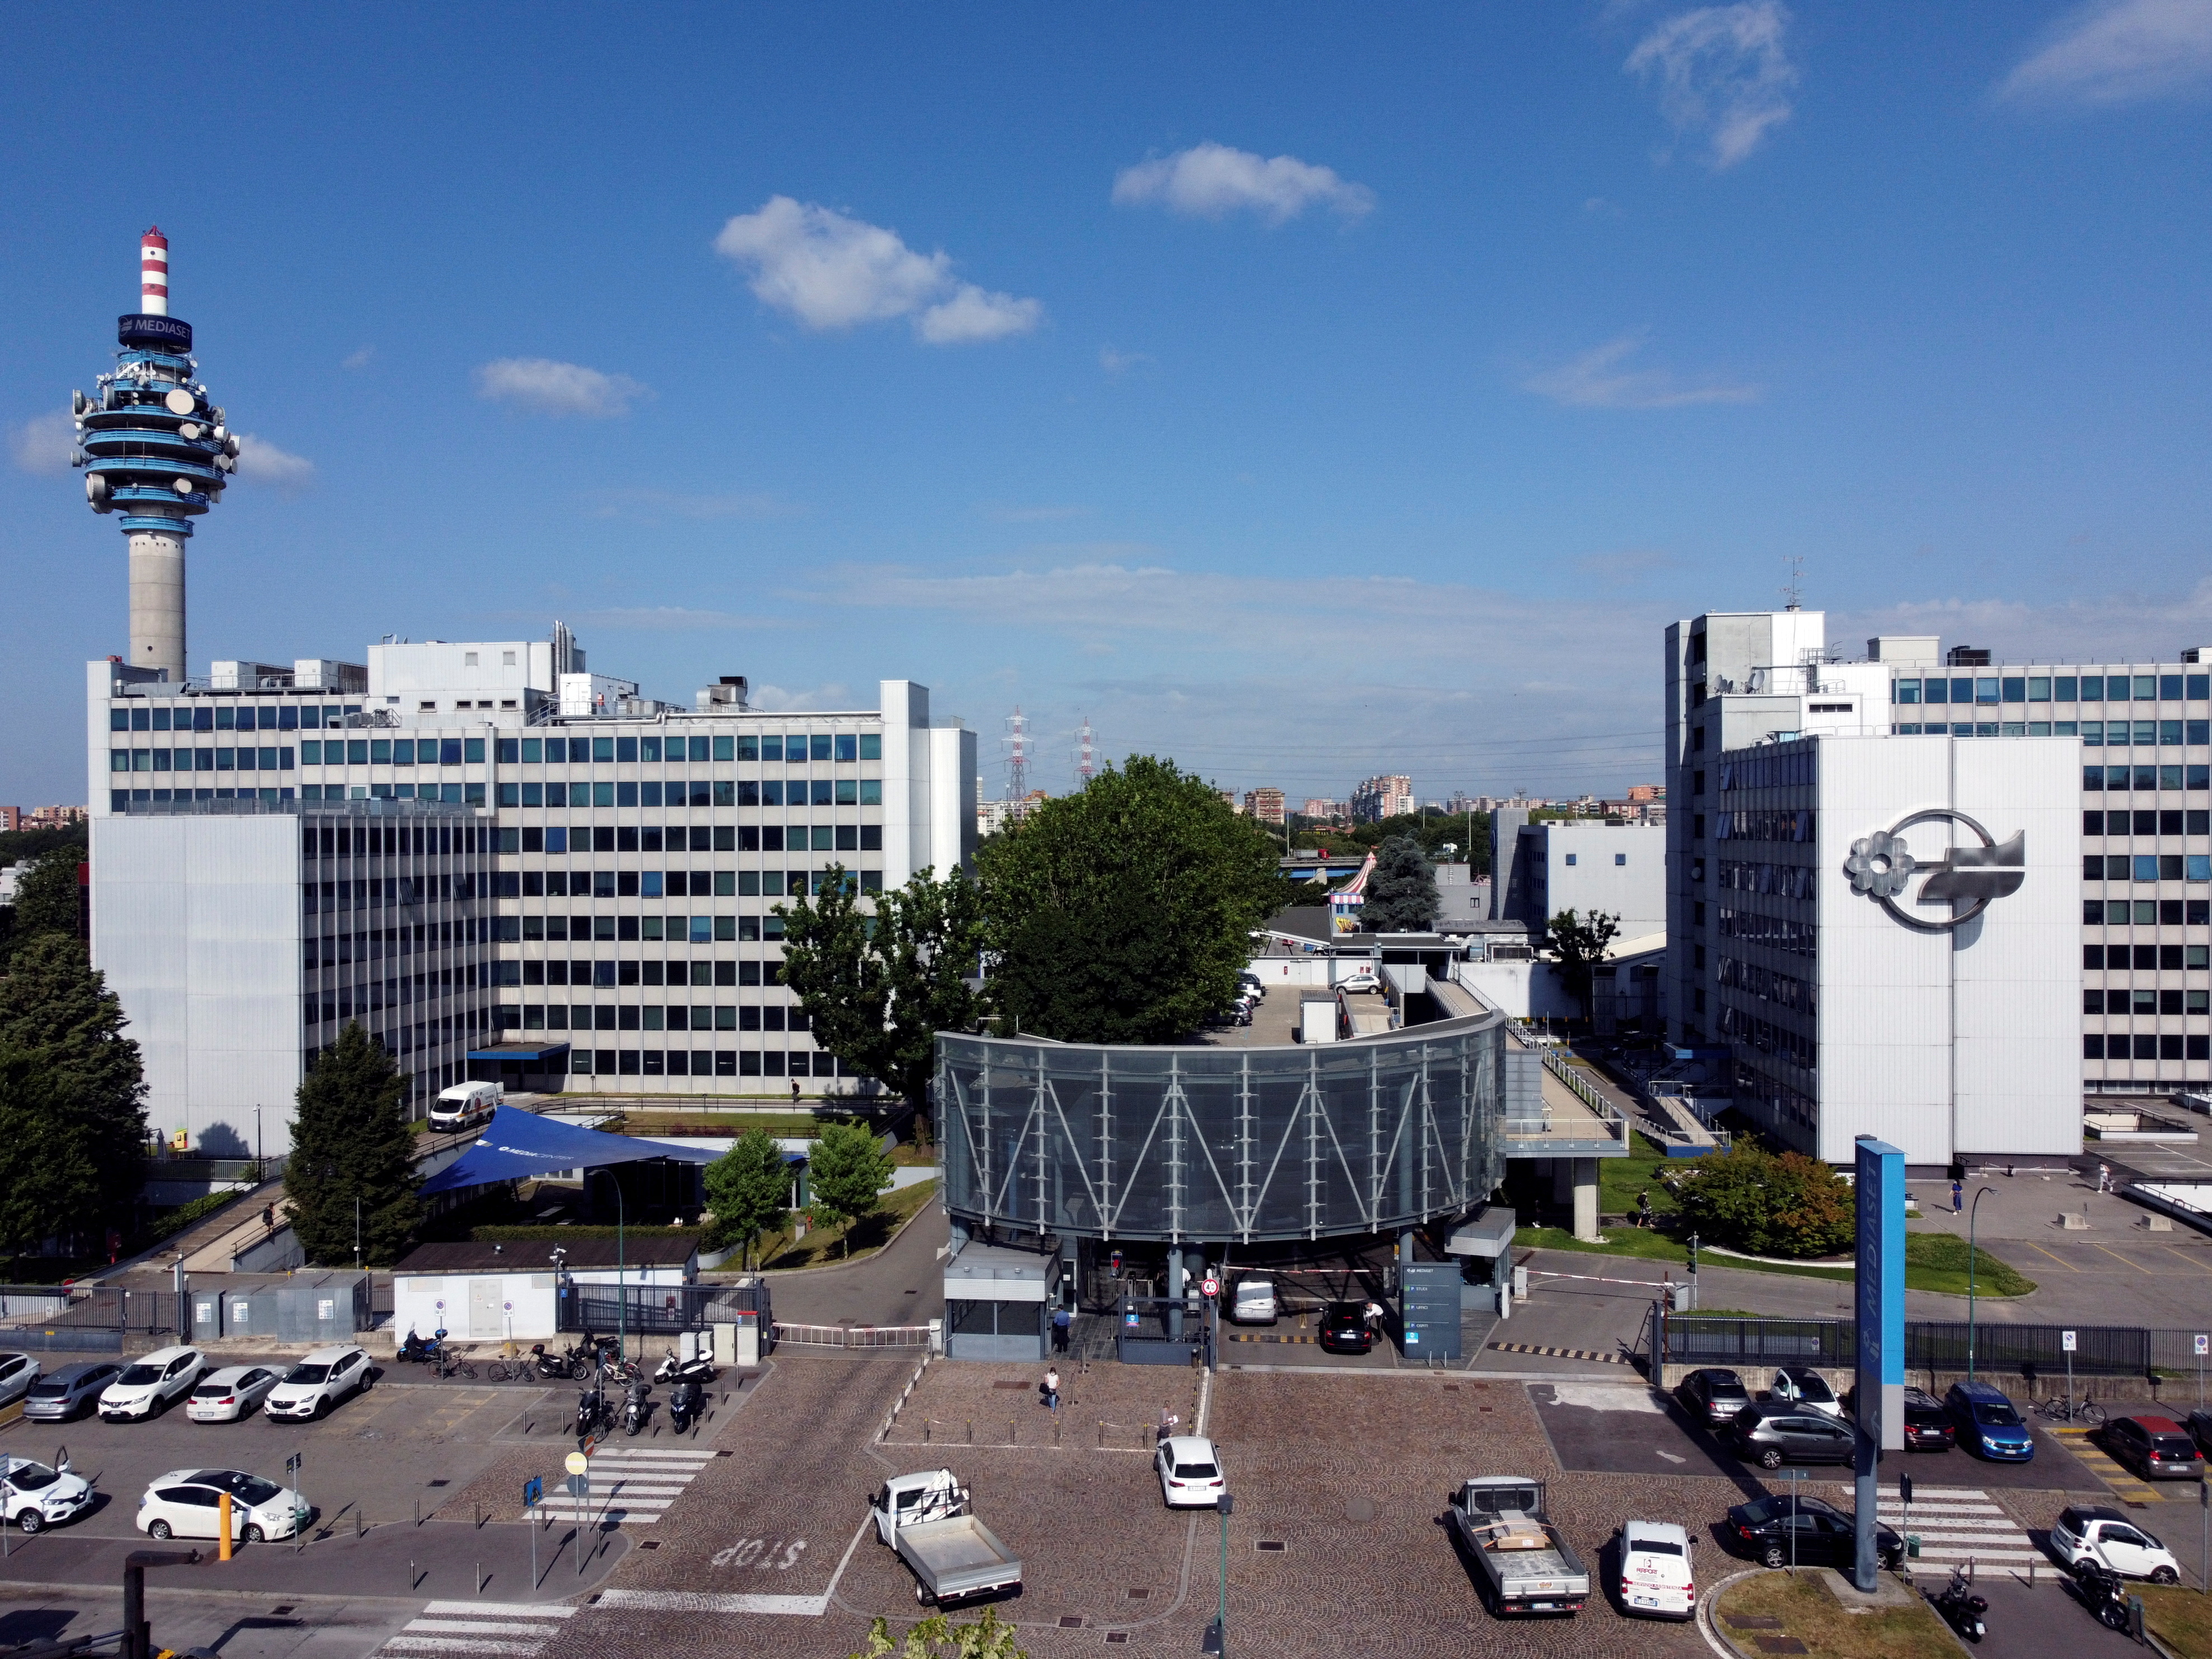 General view of Mediaset headquarters